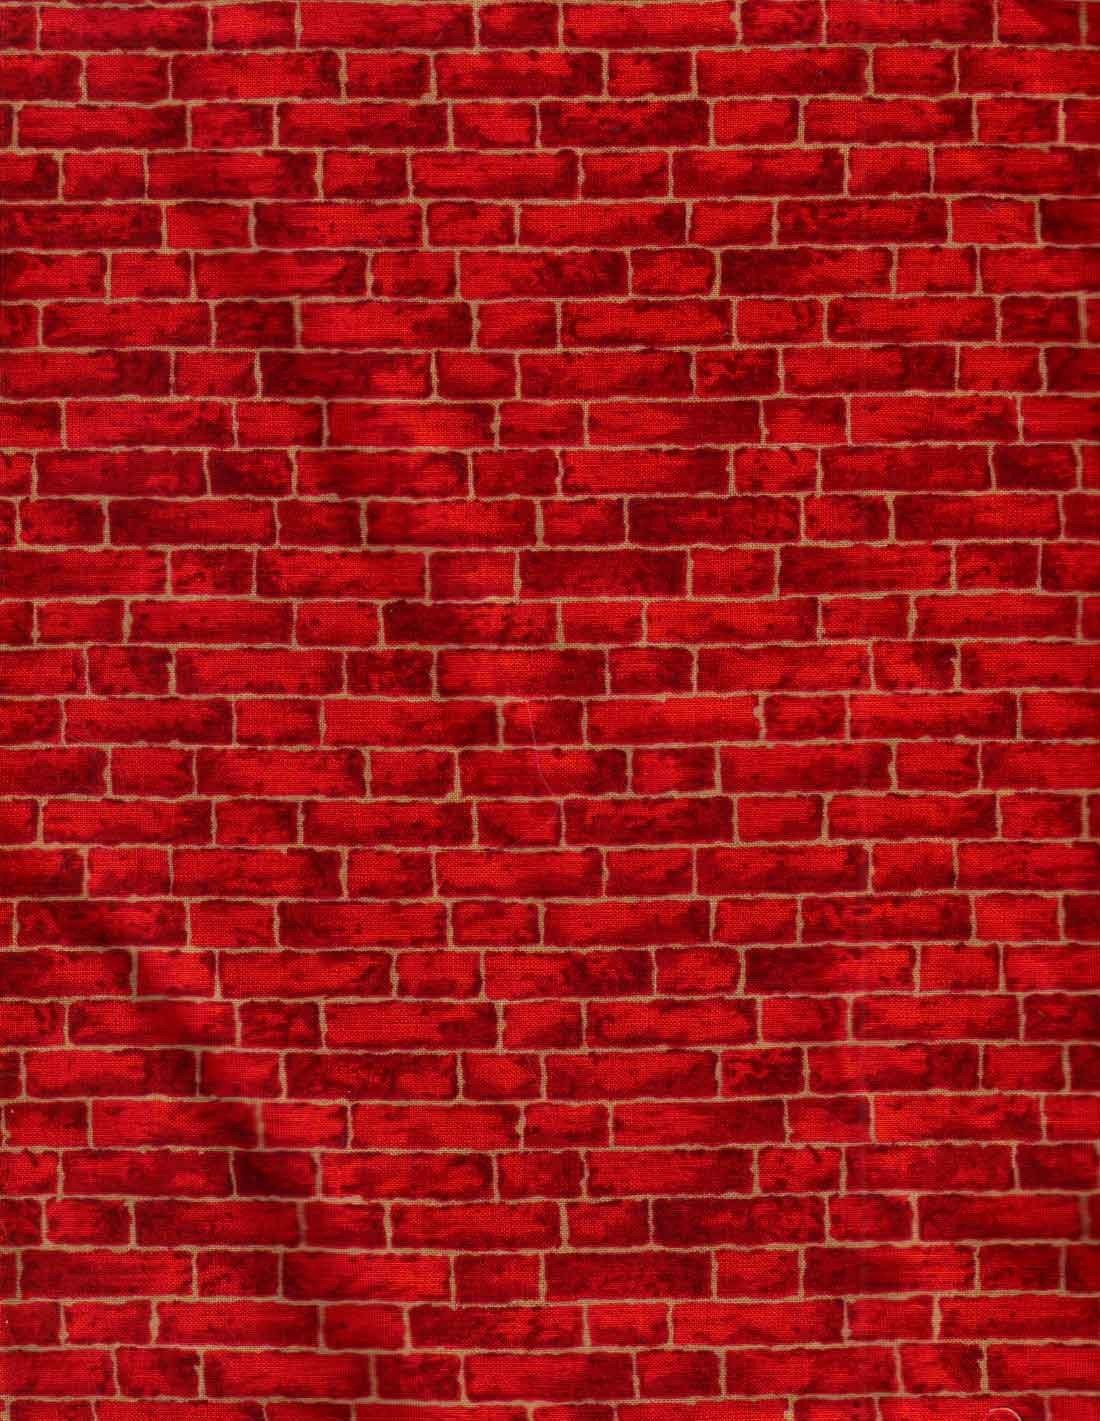 Red Brick Wall Pattern Half yard red brick print by 1100x1421.